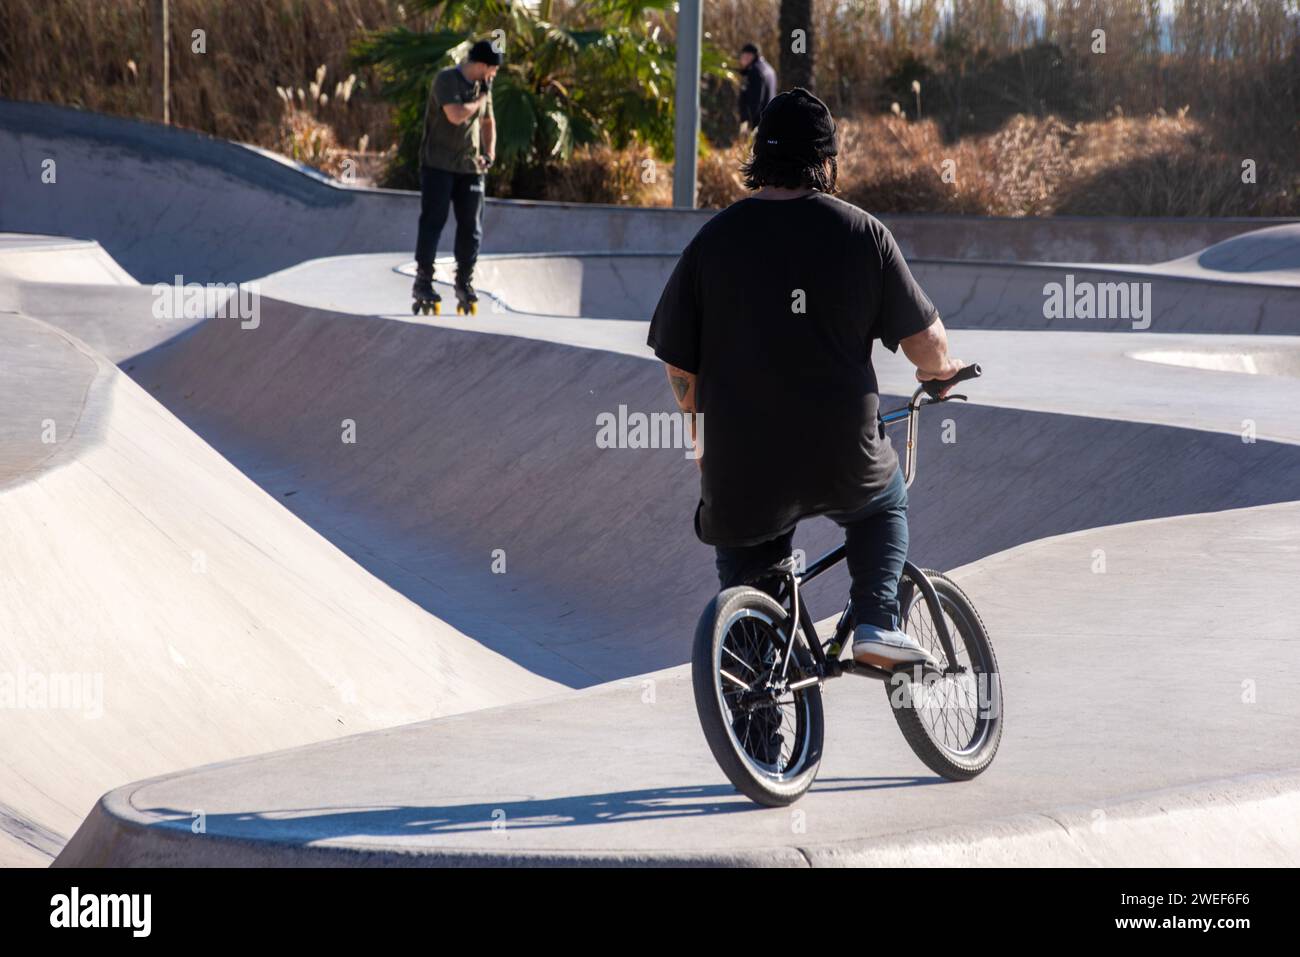 Skate park variety: Biker waits, skater glides in a diverse urban scene Stock Photo